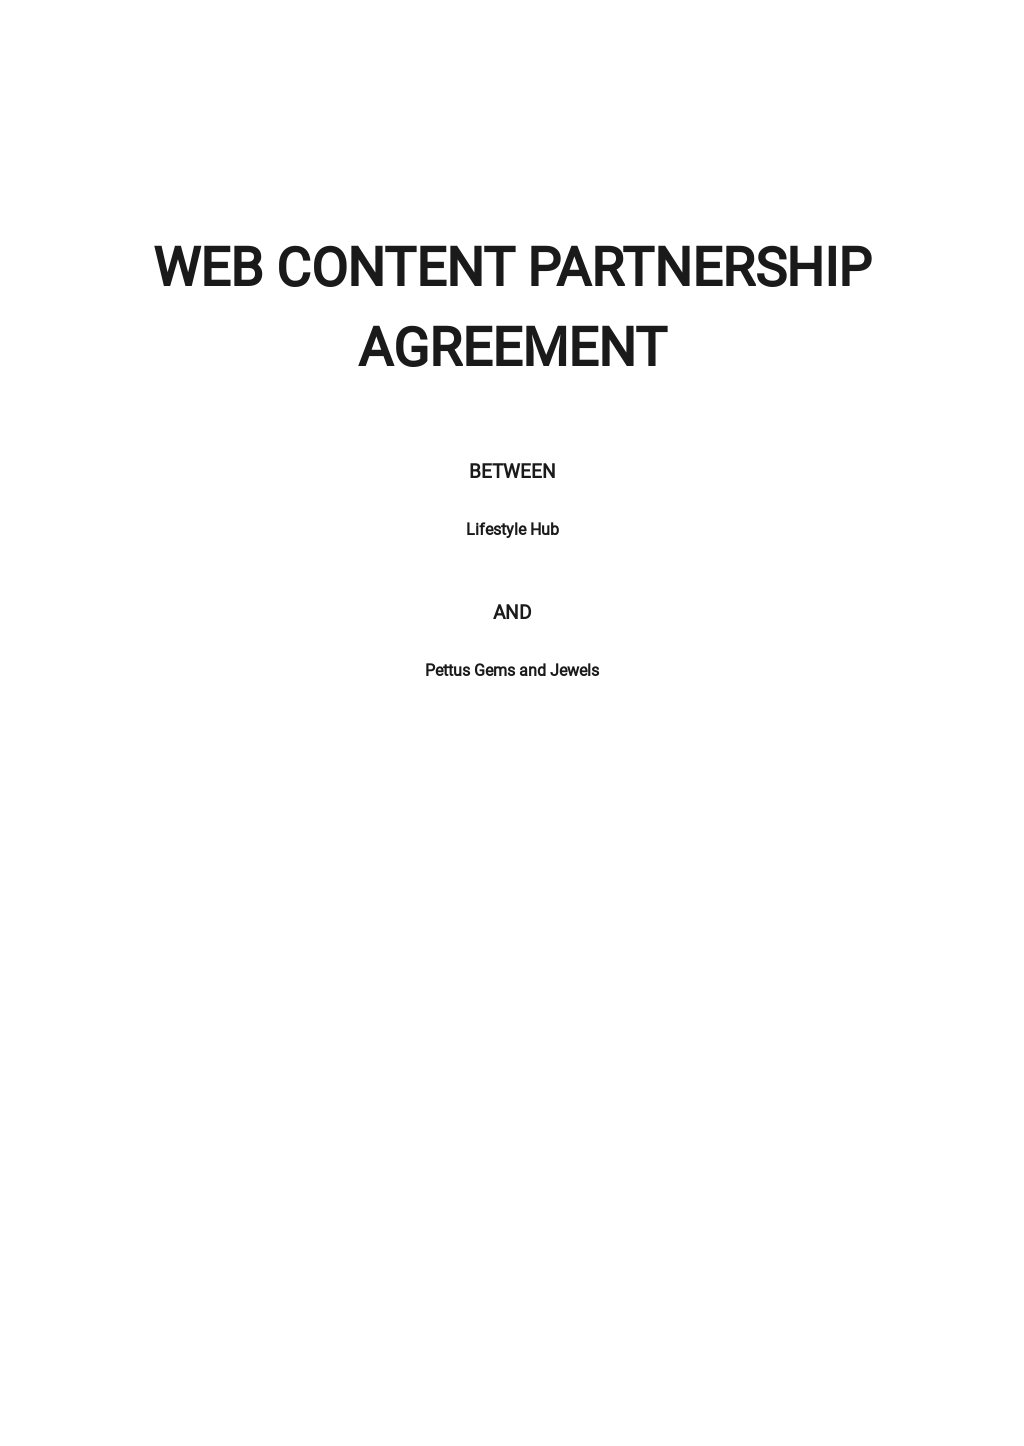 Web Content Partnership Agreement Template.jpe